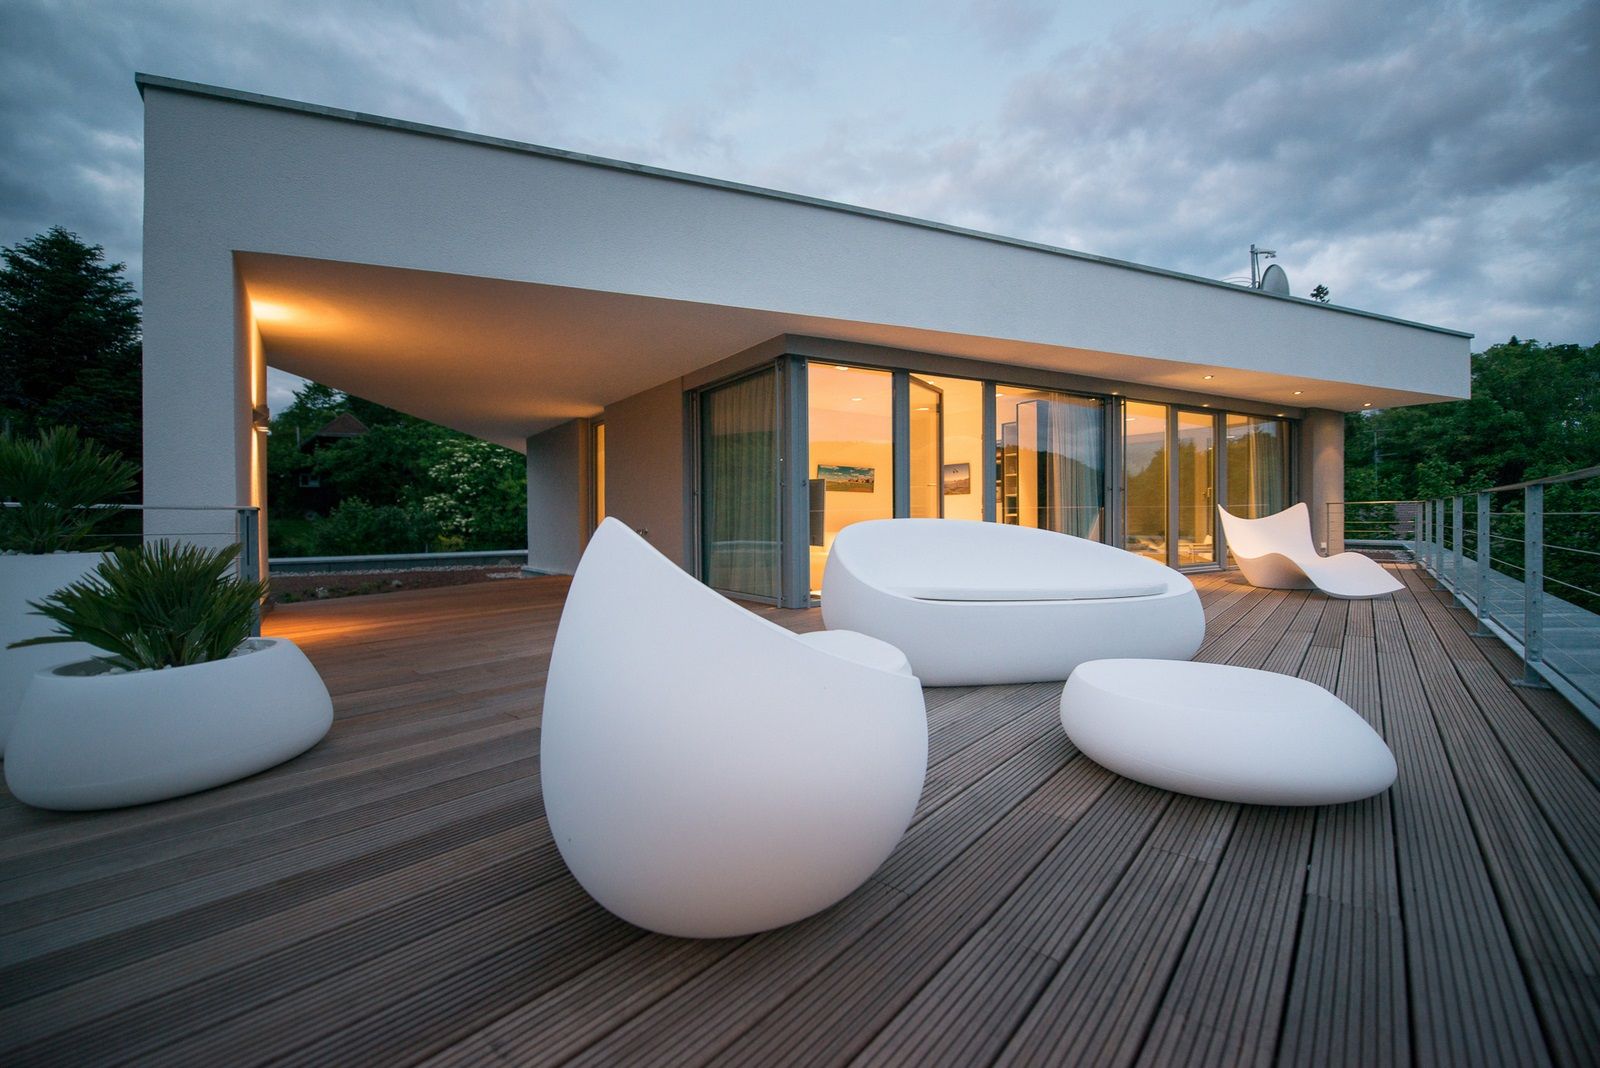 Moderne Villa am Hang mit Pool, Avantecture GmbH Avantecture GmbH ระเบียง, นอกชาน